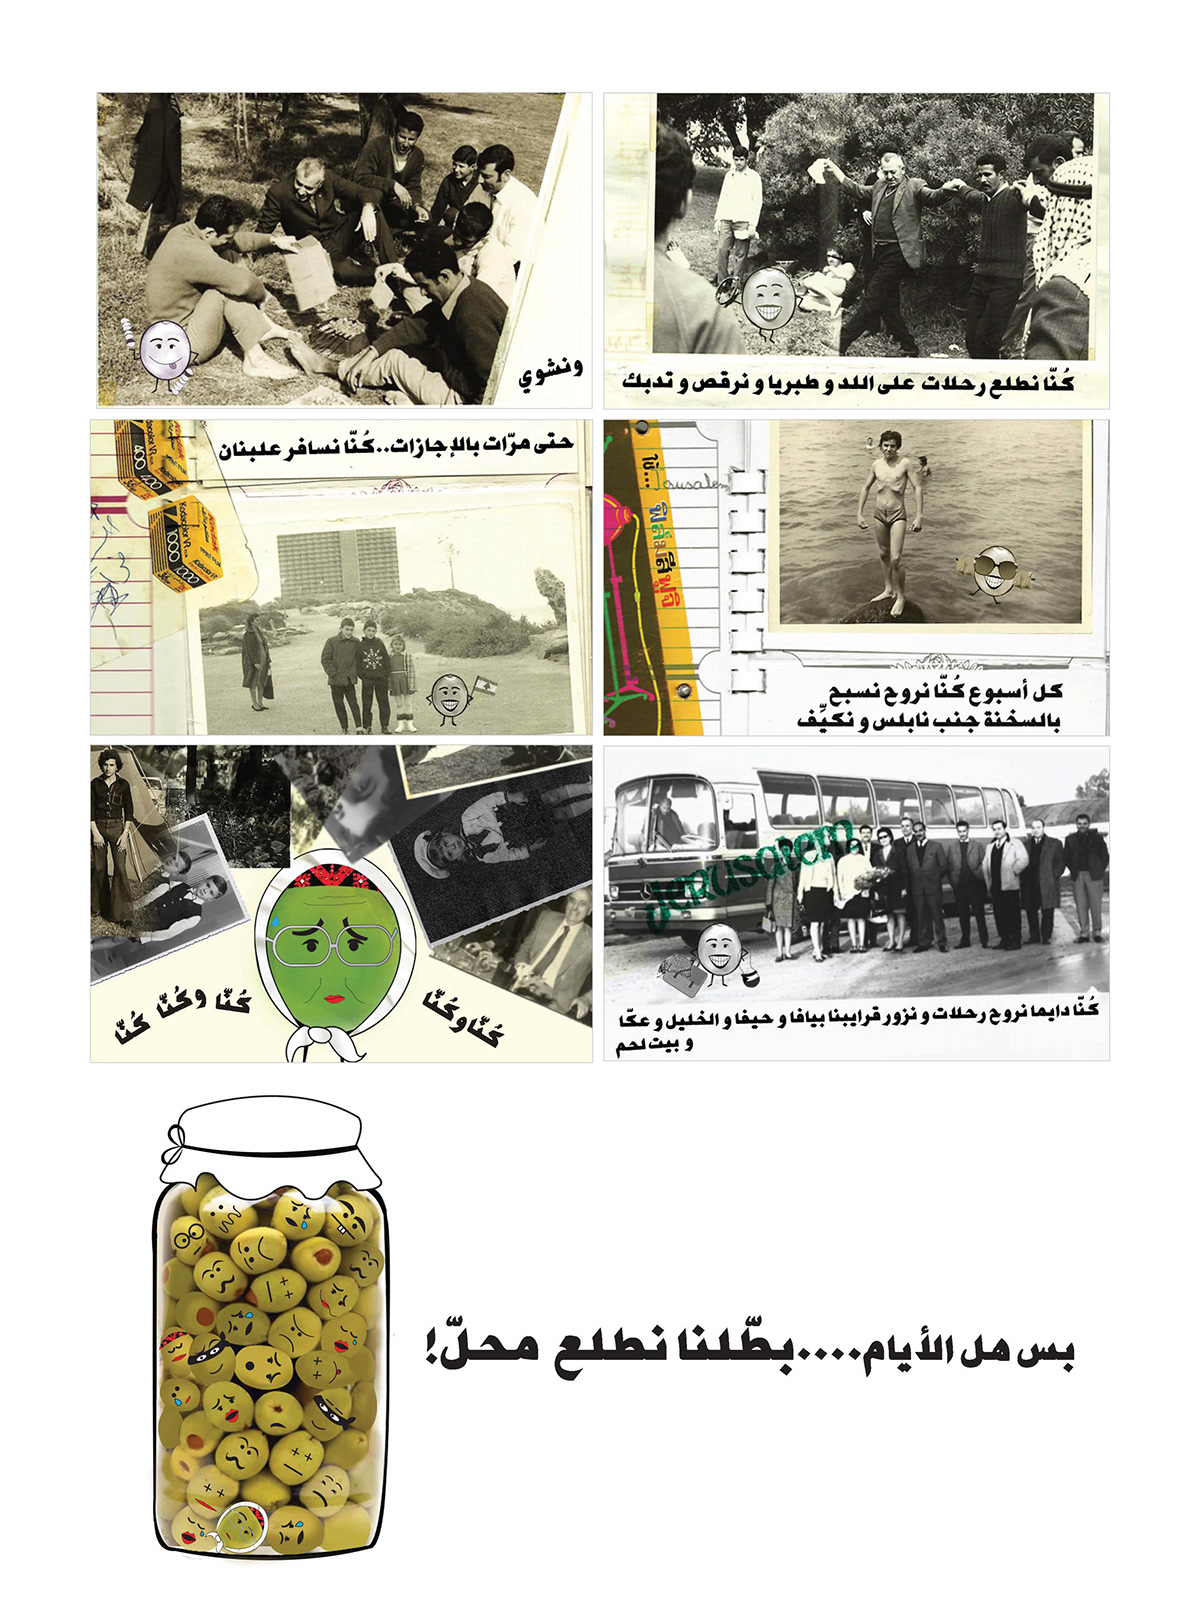 palestine nablus comic novel photos old album memories